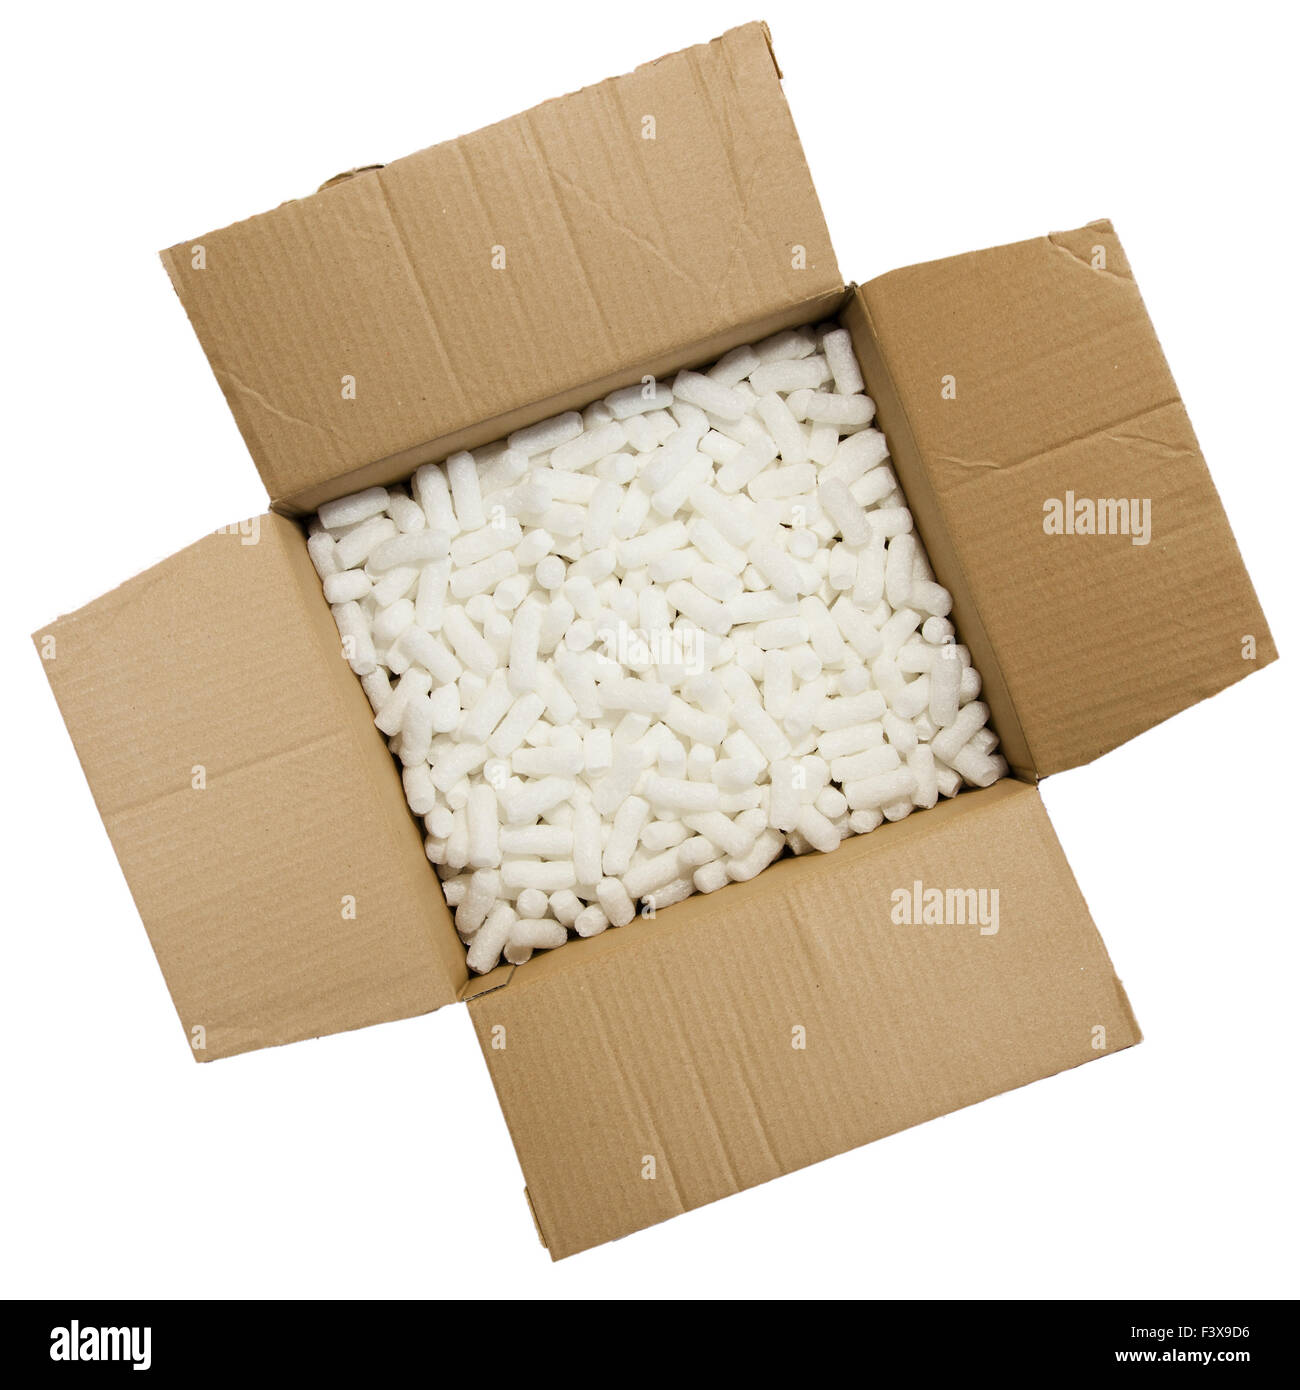 Styrofoam balls in a box Stock Photo